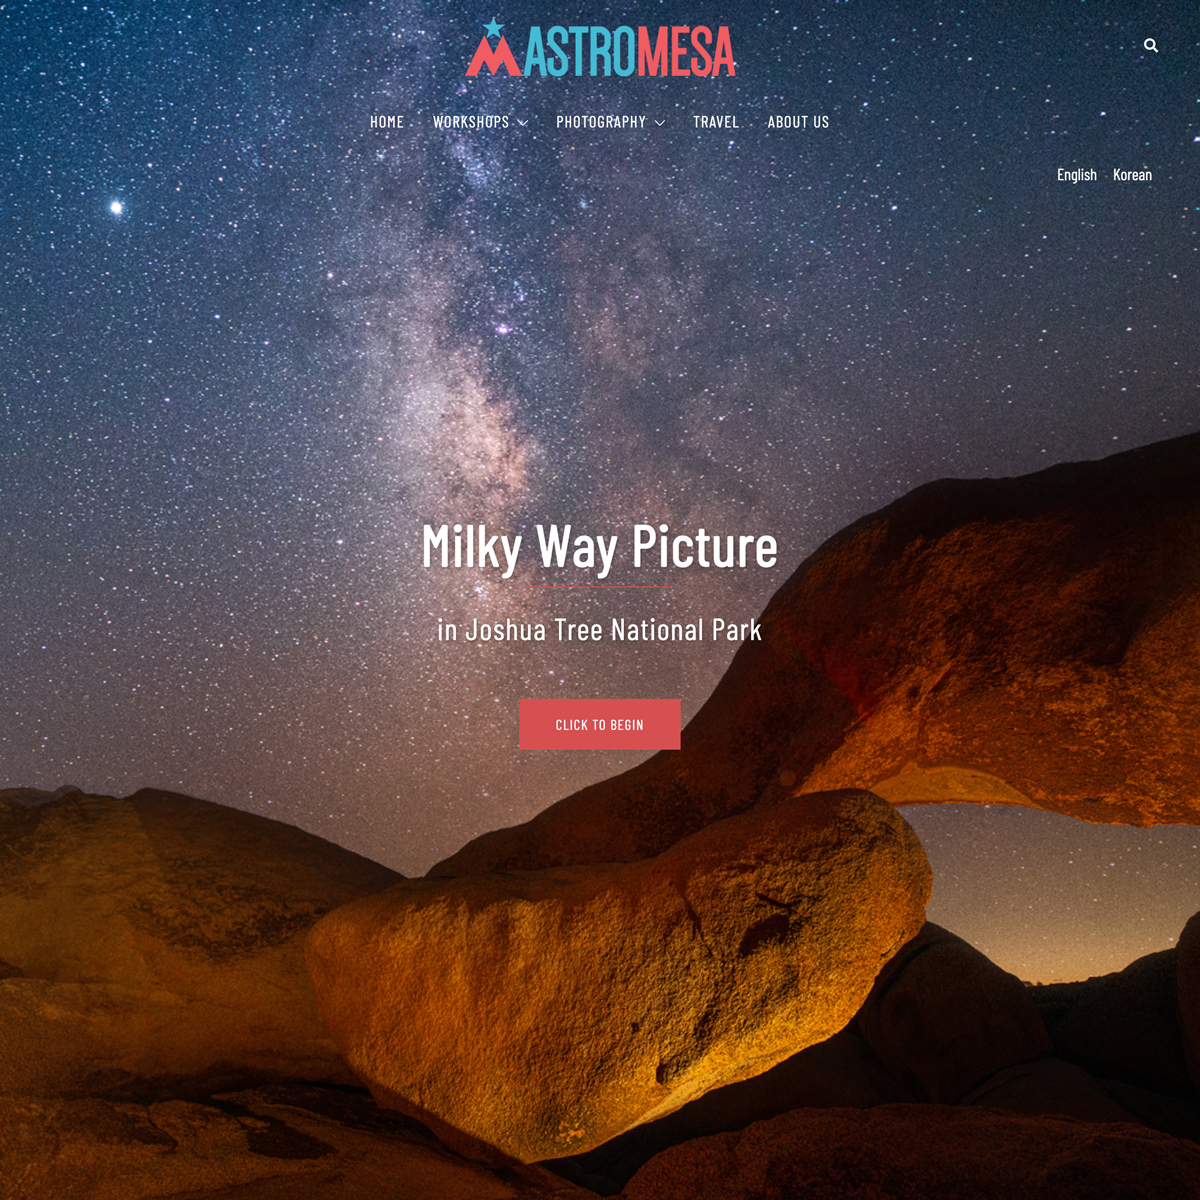 lumipicture website media service astro mesa